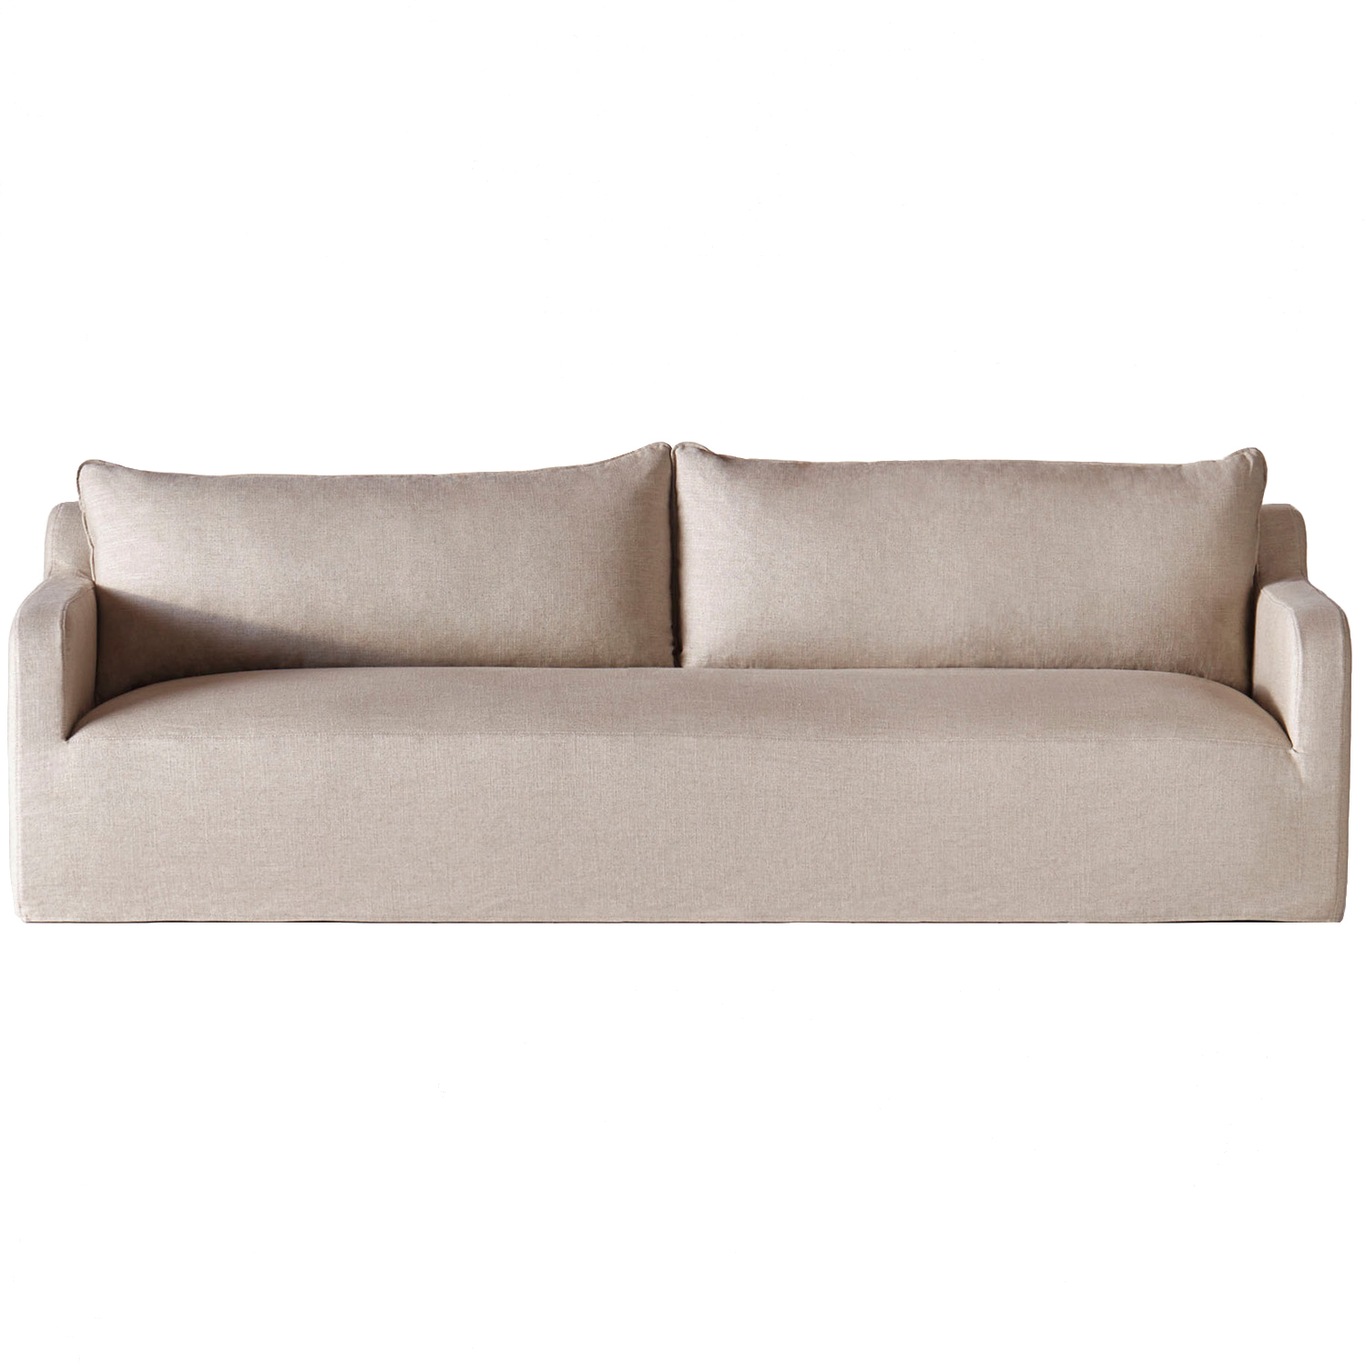 Dolores 3-Seater Sofa, Sand